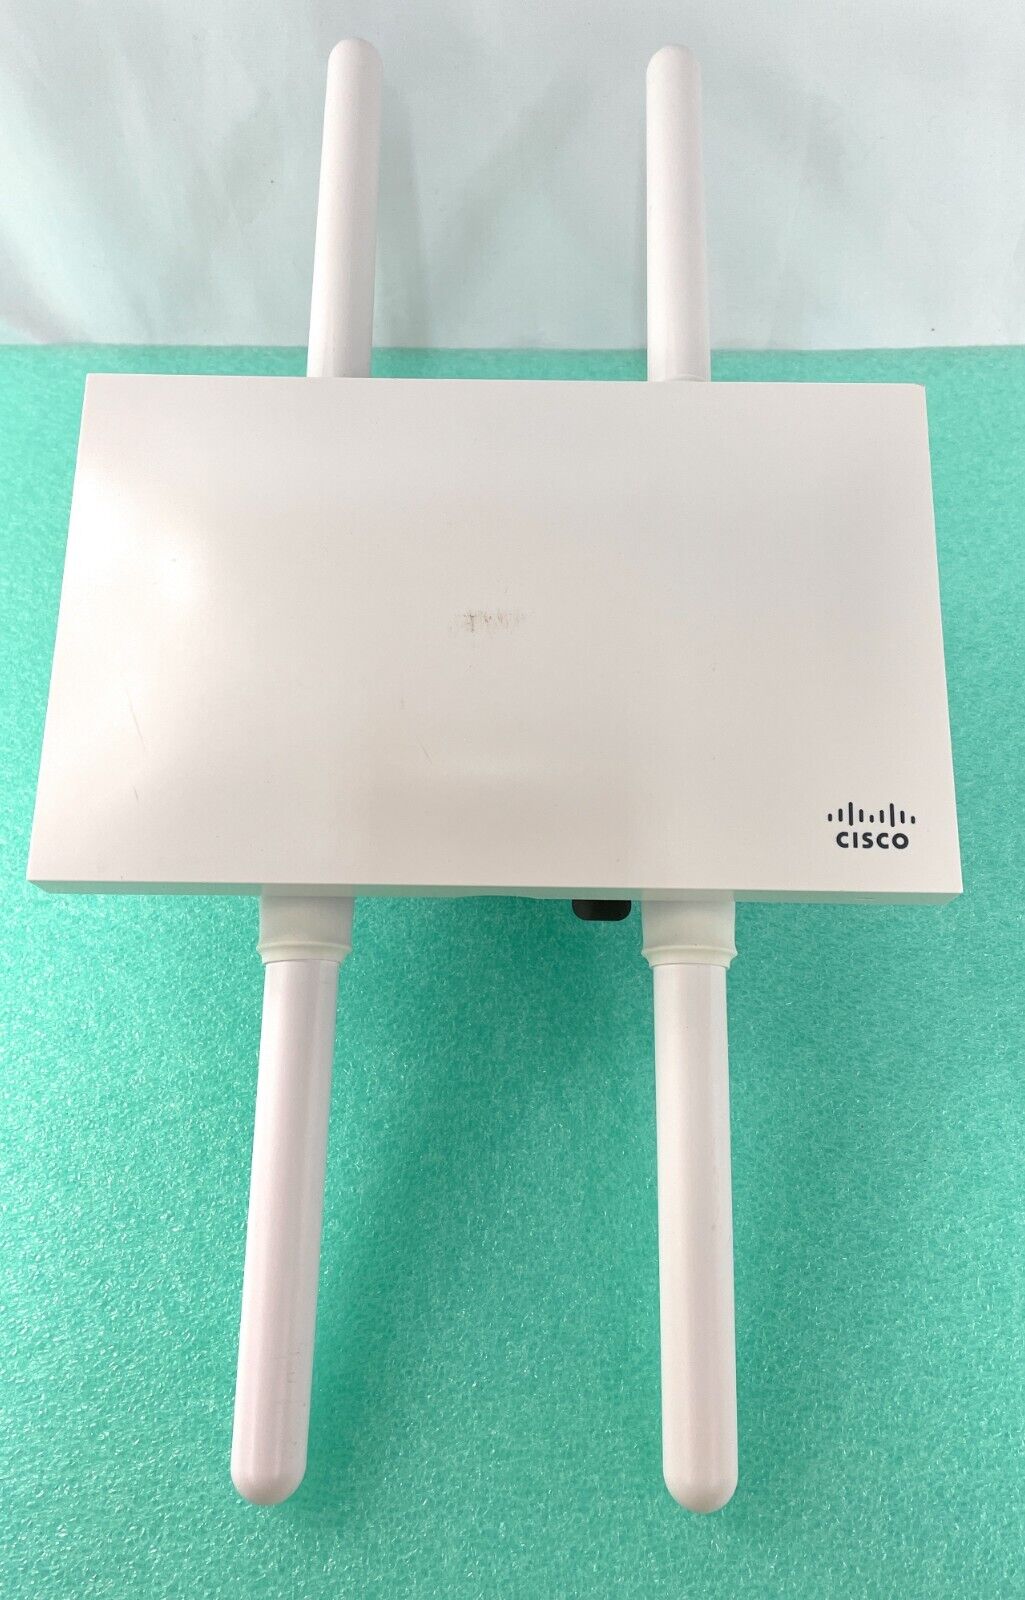 Cisco Meraki MR74 802.11ac Cloud Managed Wireless Access Point with Antennas